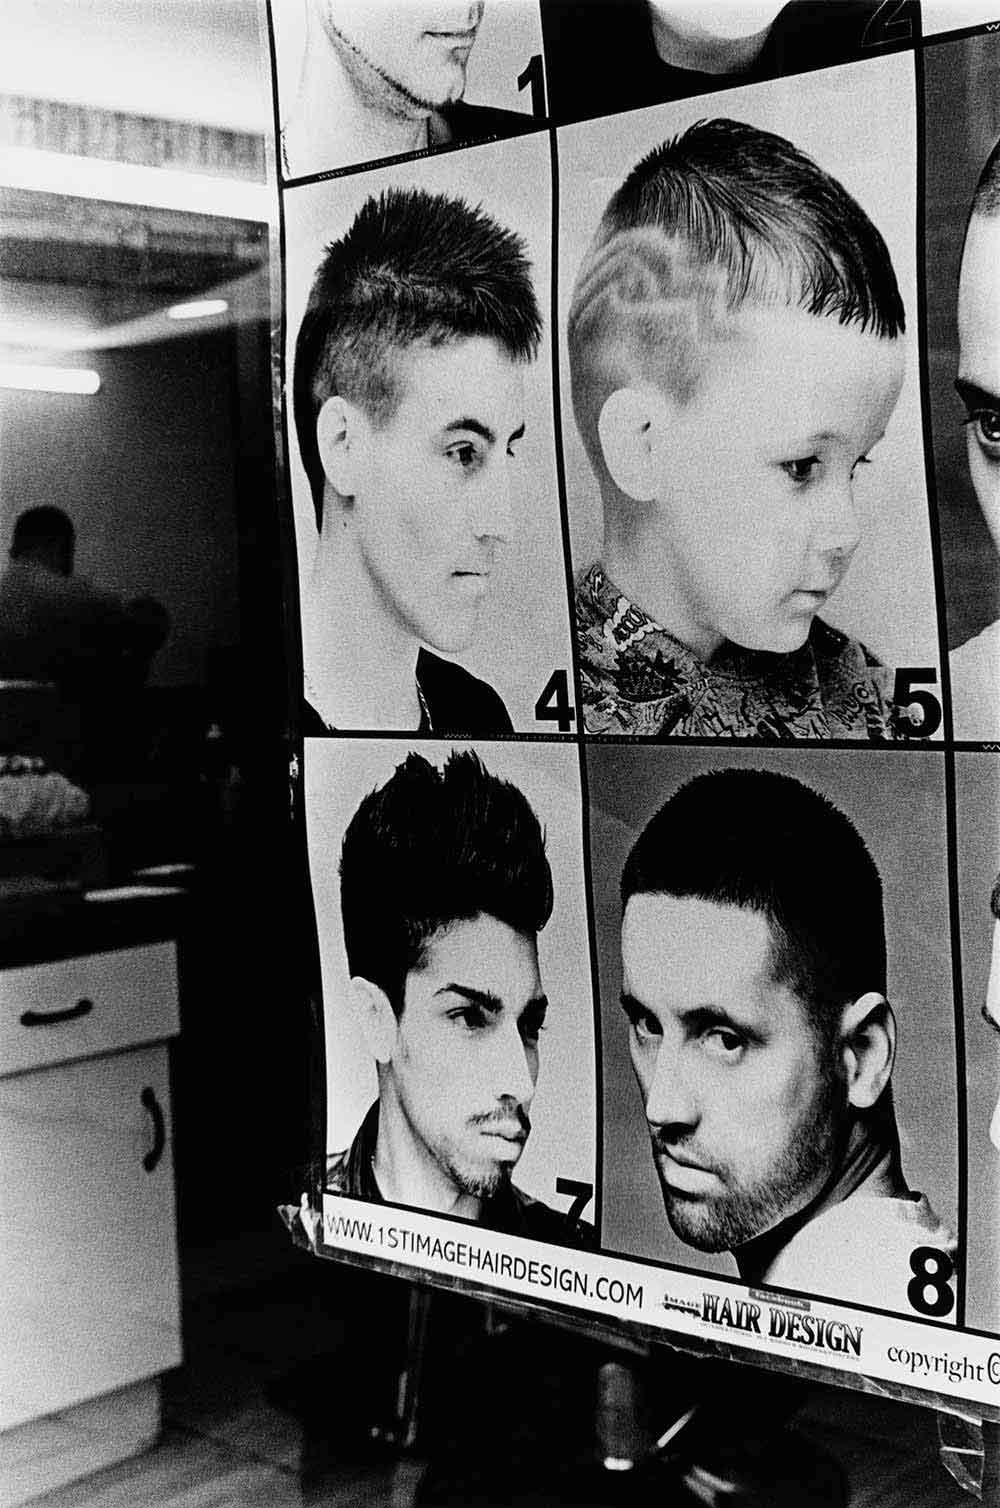 Barber shop, part of a series of photographs by Stephie Devred that captures the unique spirit of the East London street market, Roman Road Market.